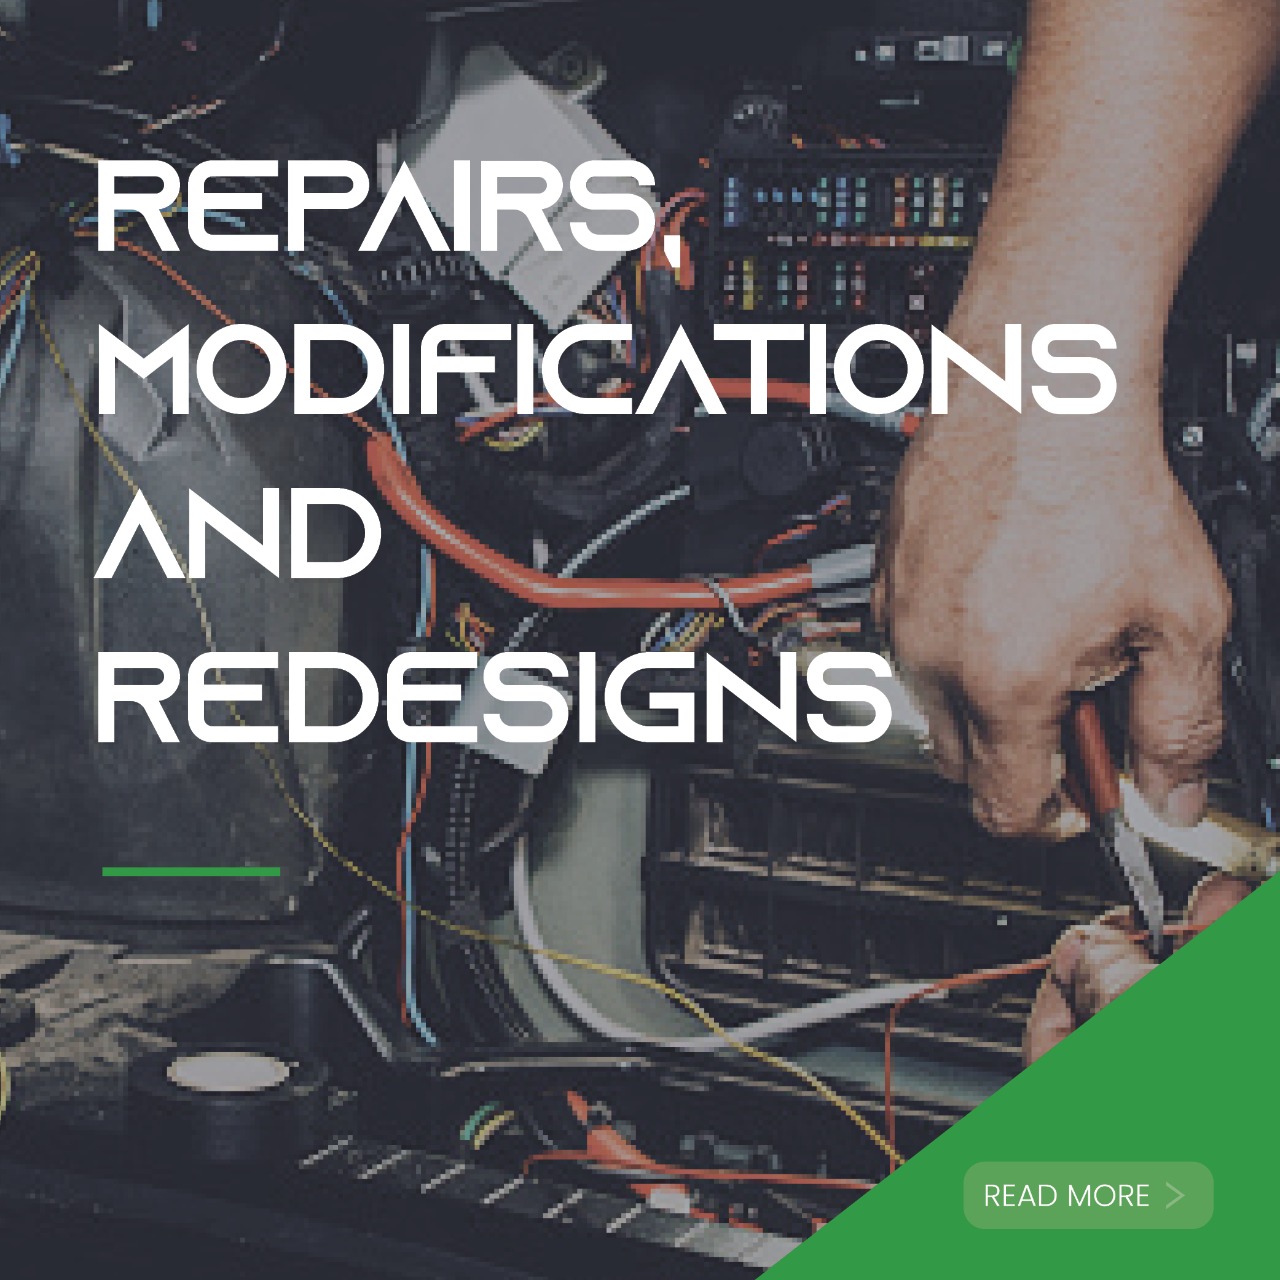 Cableman_Push_repairs_modifications